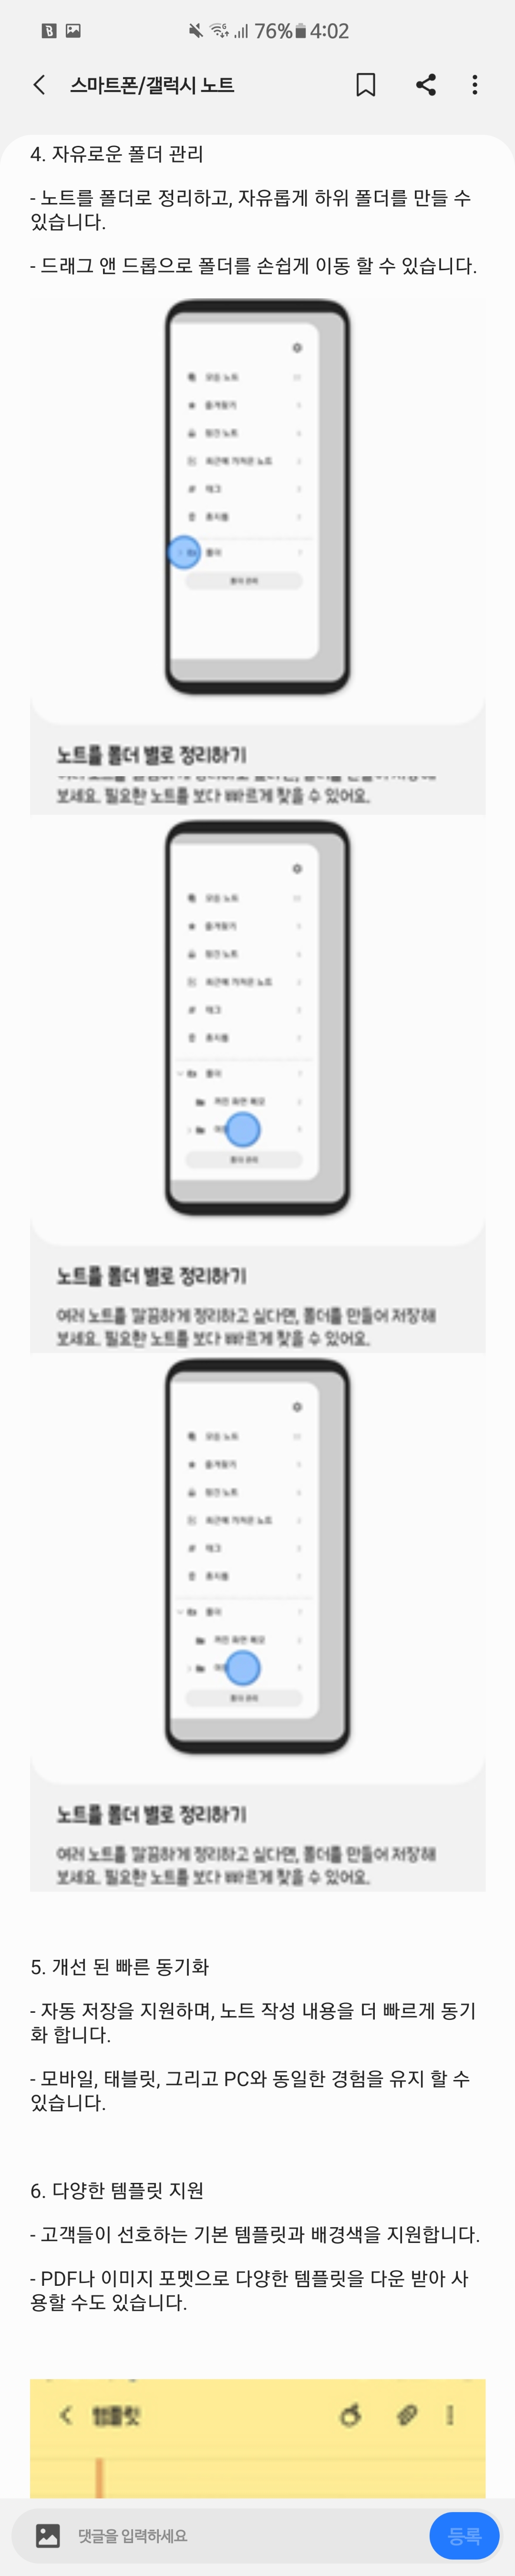 Screenshot_20200806-160212_Samsung Members.jpg